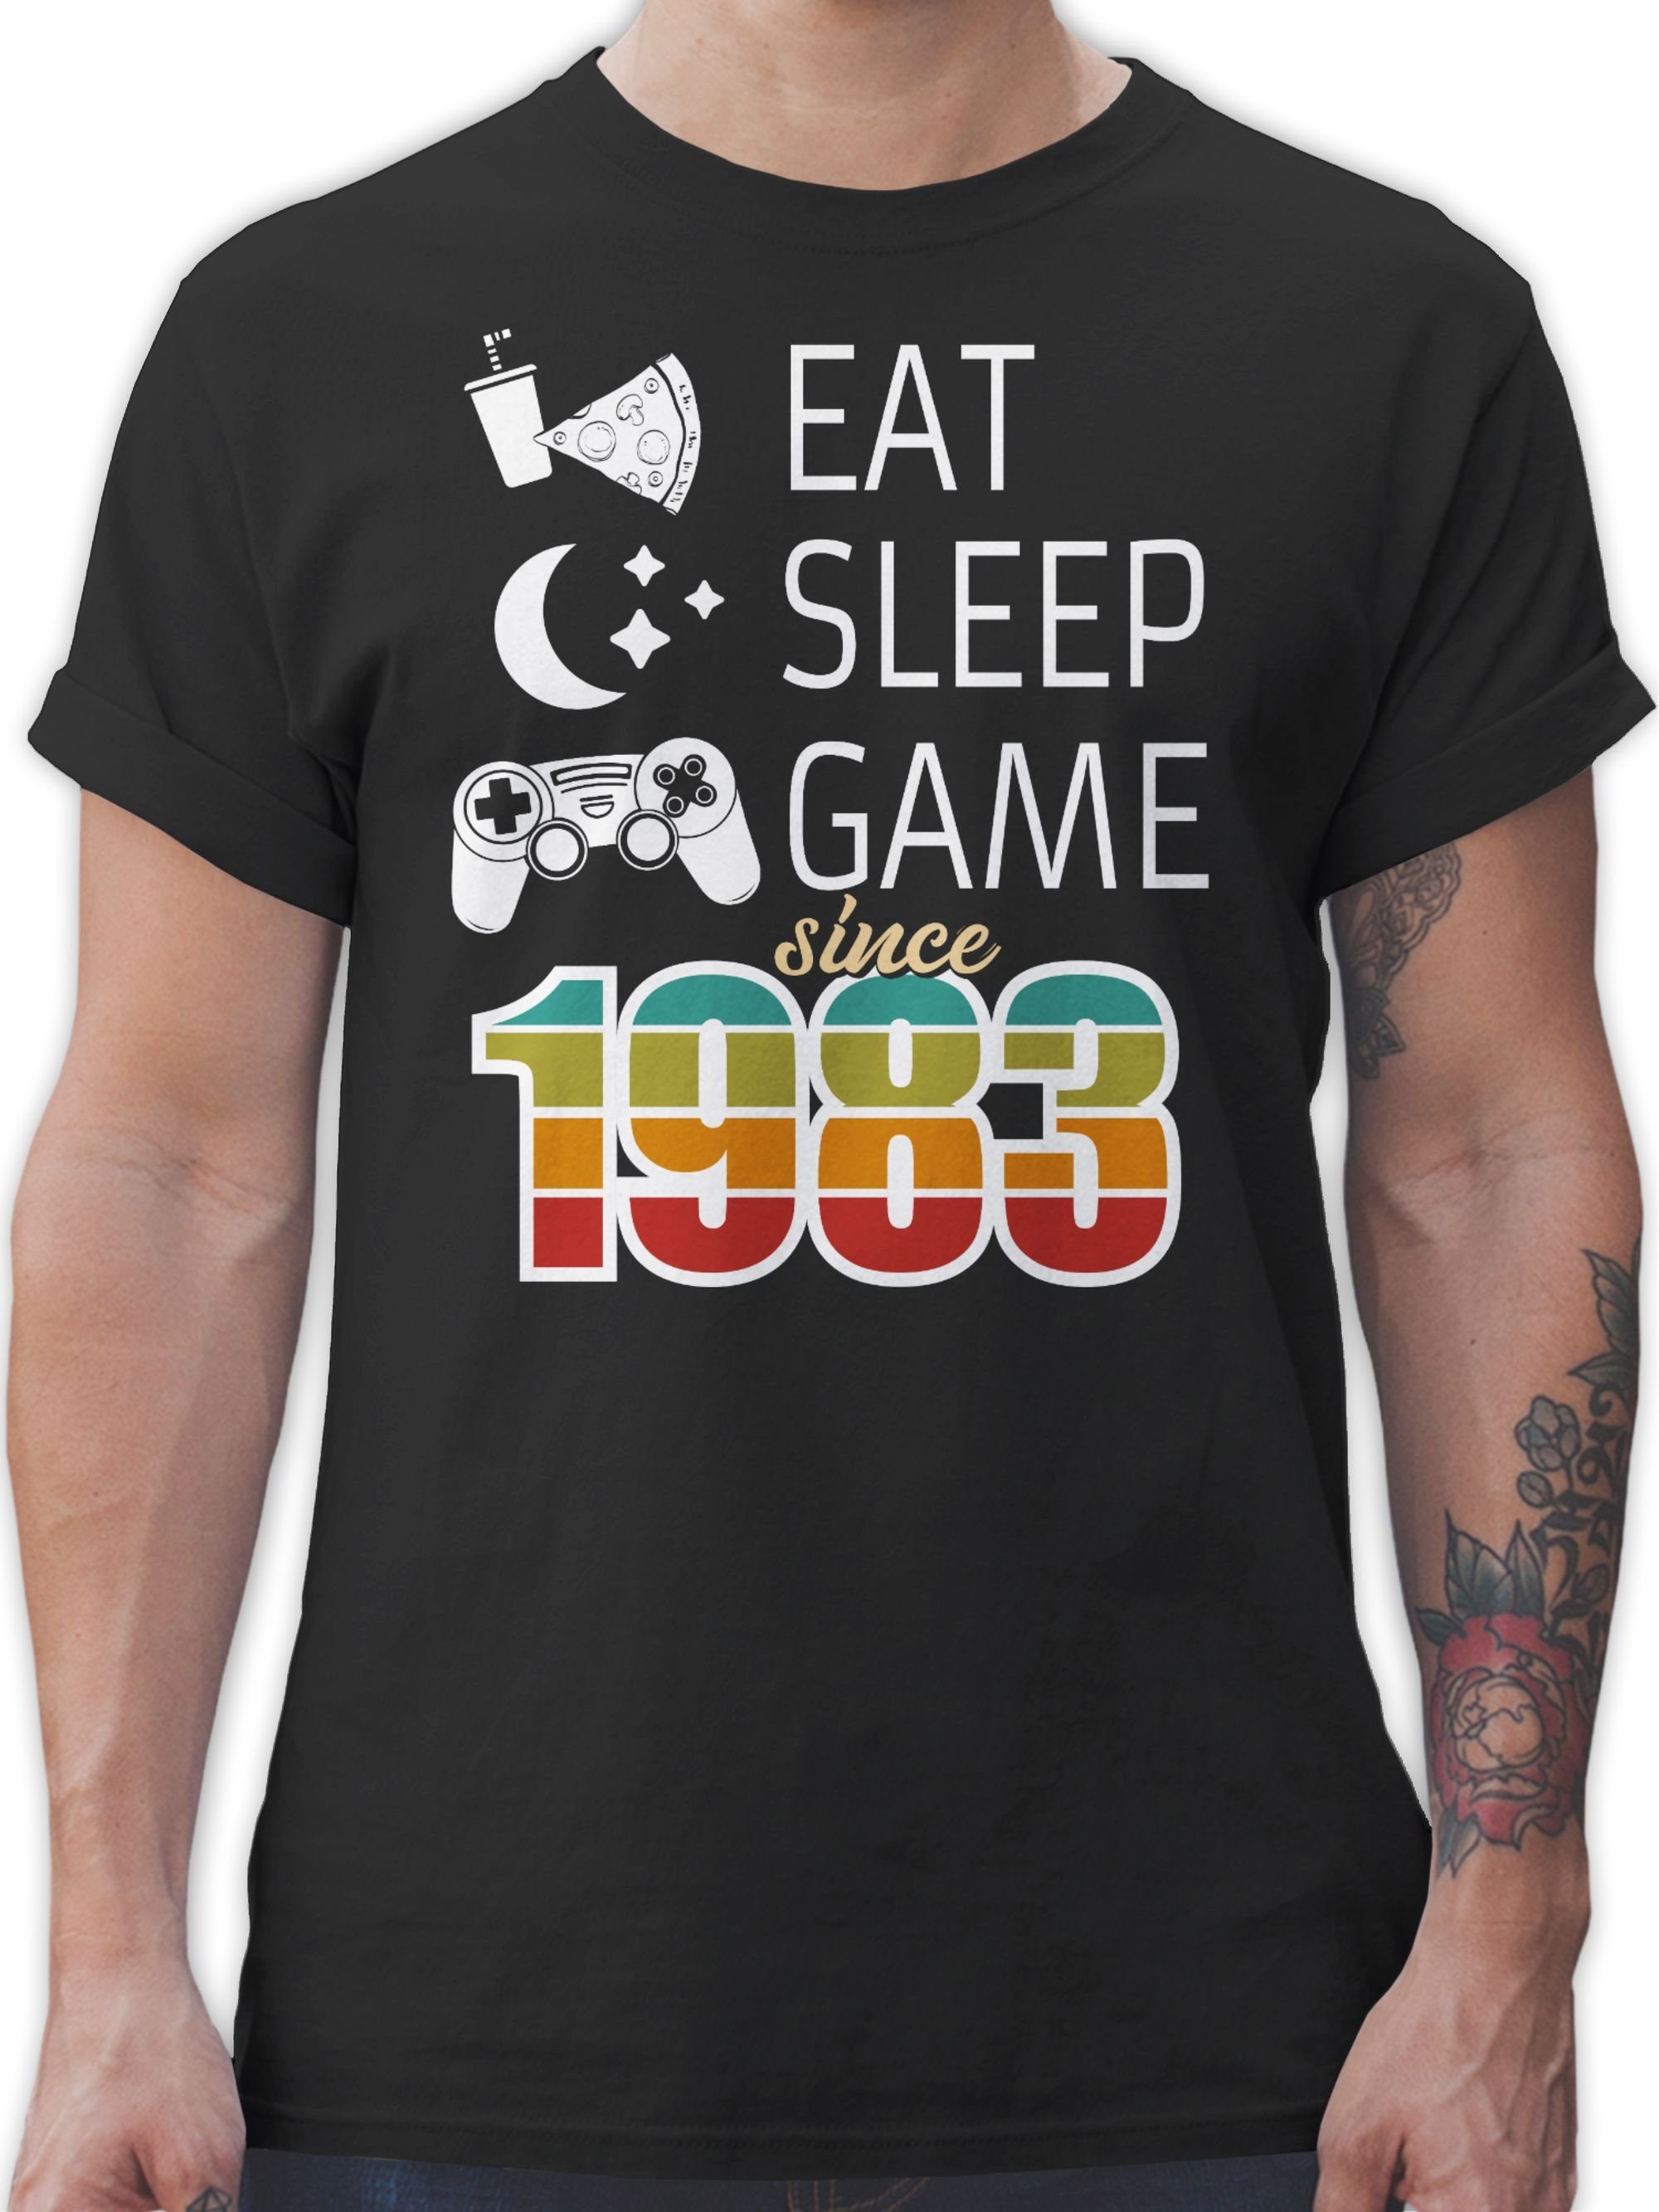 Shirtracer T-Shirt Eat sleep Game since 1983 bunt 40. Geburtstag 01 Schwarz | T-Shirts